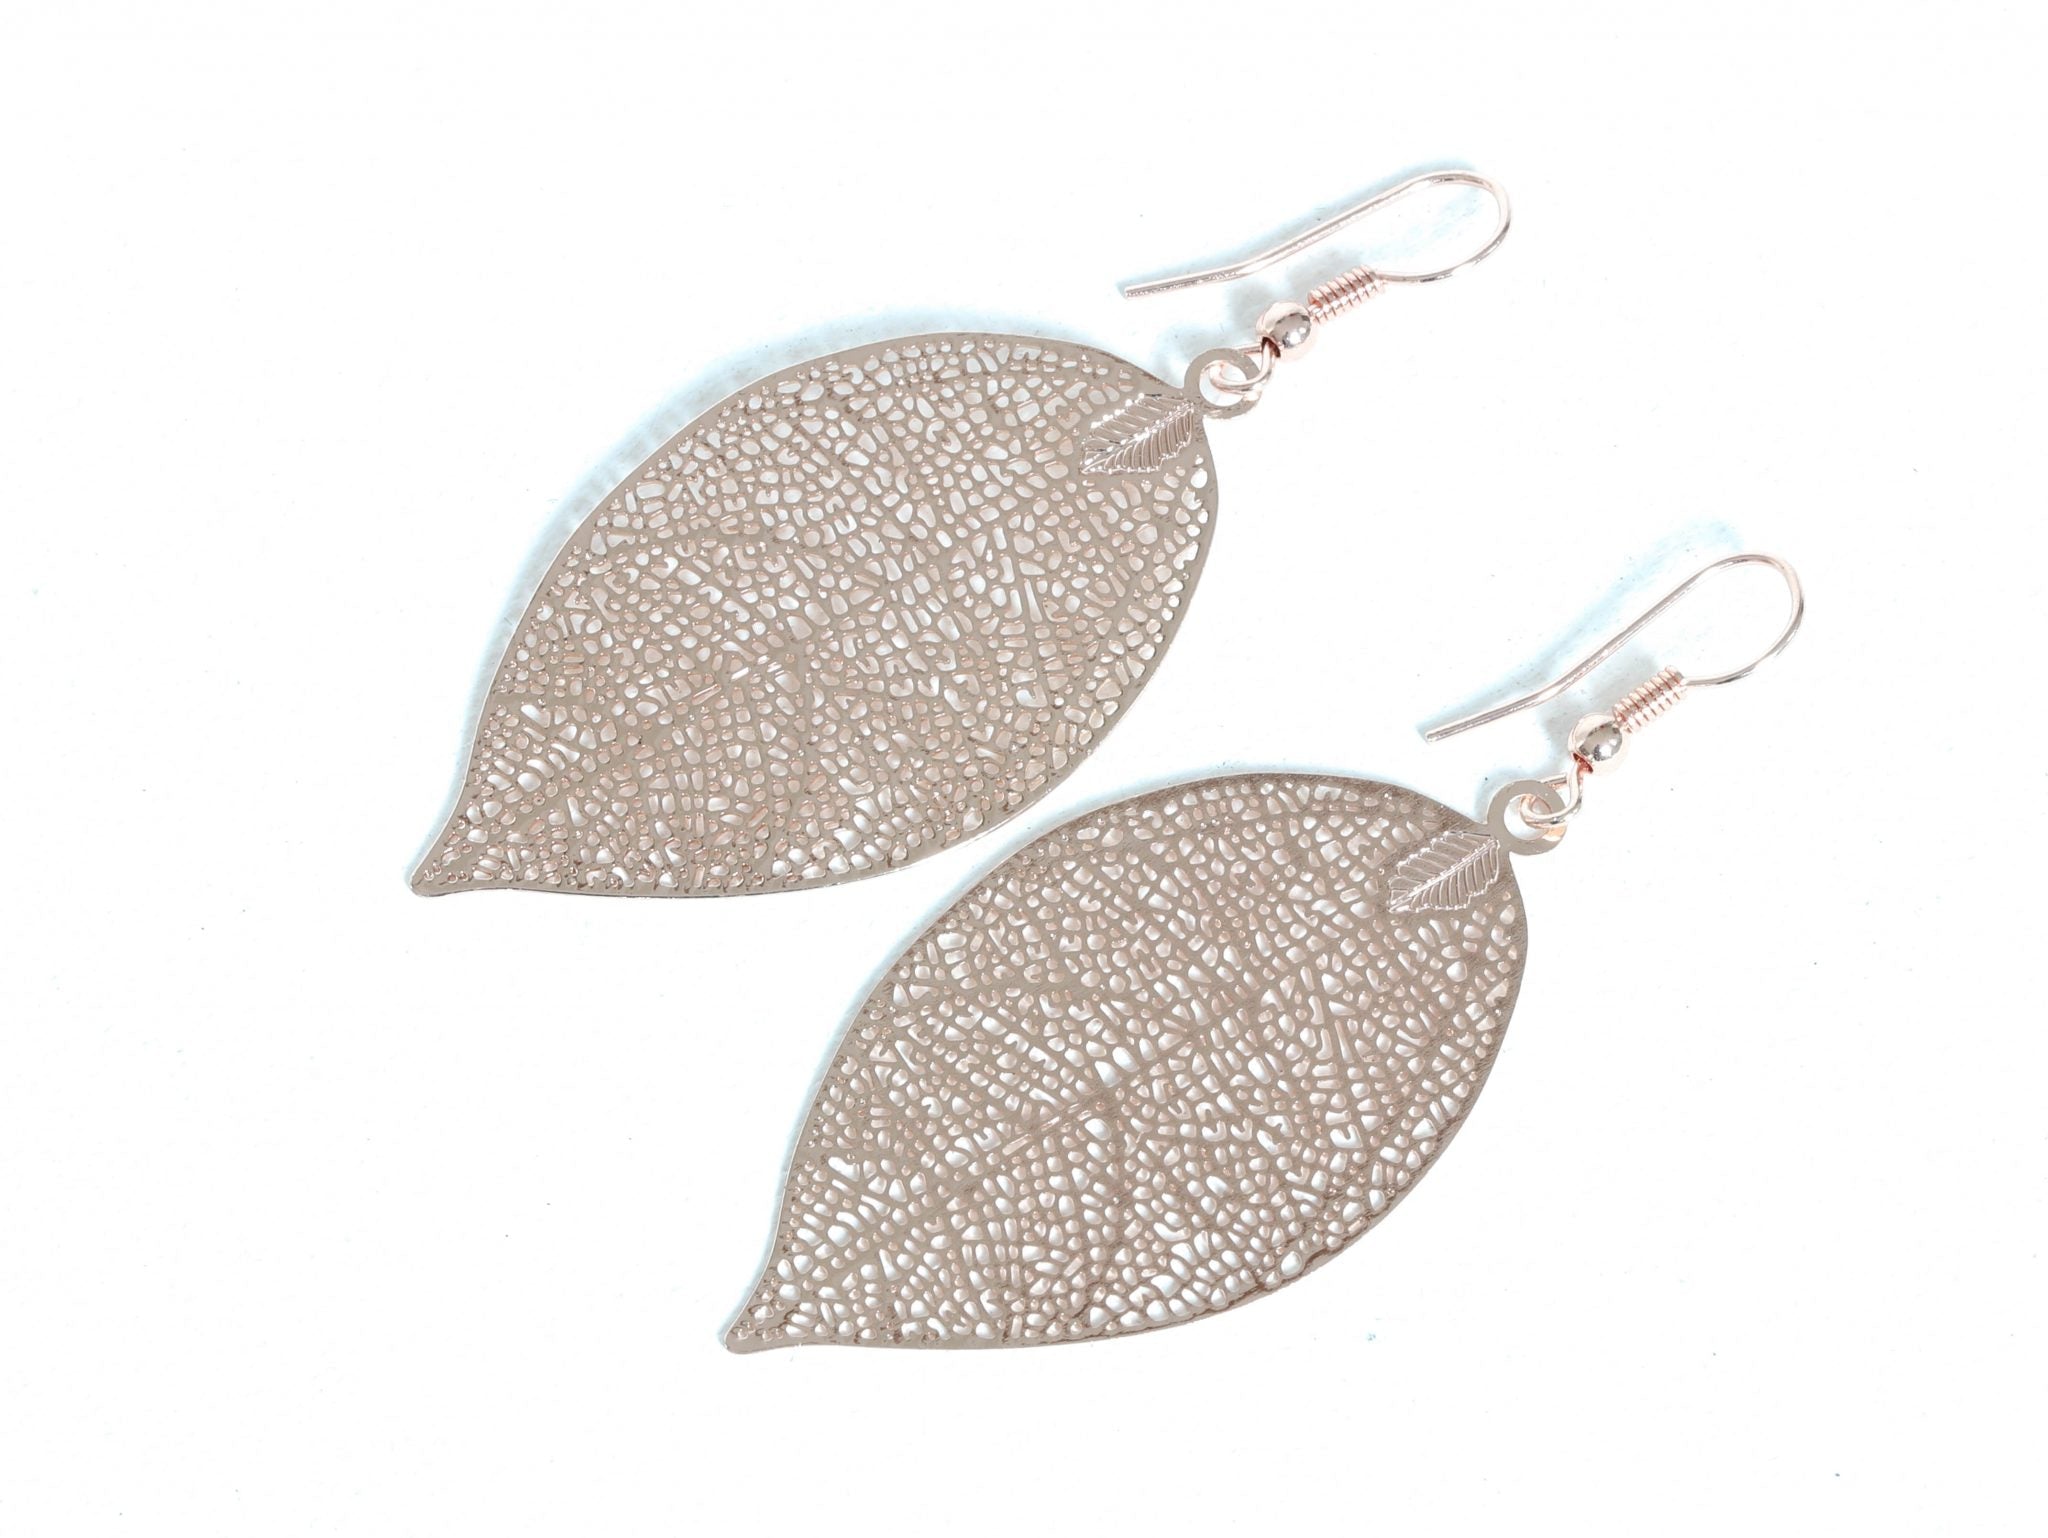 Gold Filigree Leaf Earrings - The Nancy Smillie Shop - Art, Jewellery & Designer Gifts Glasgow